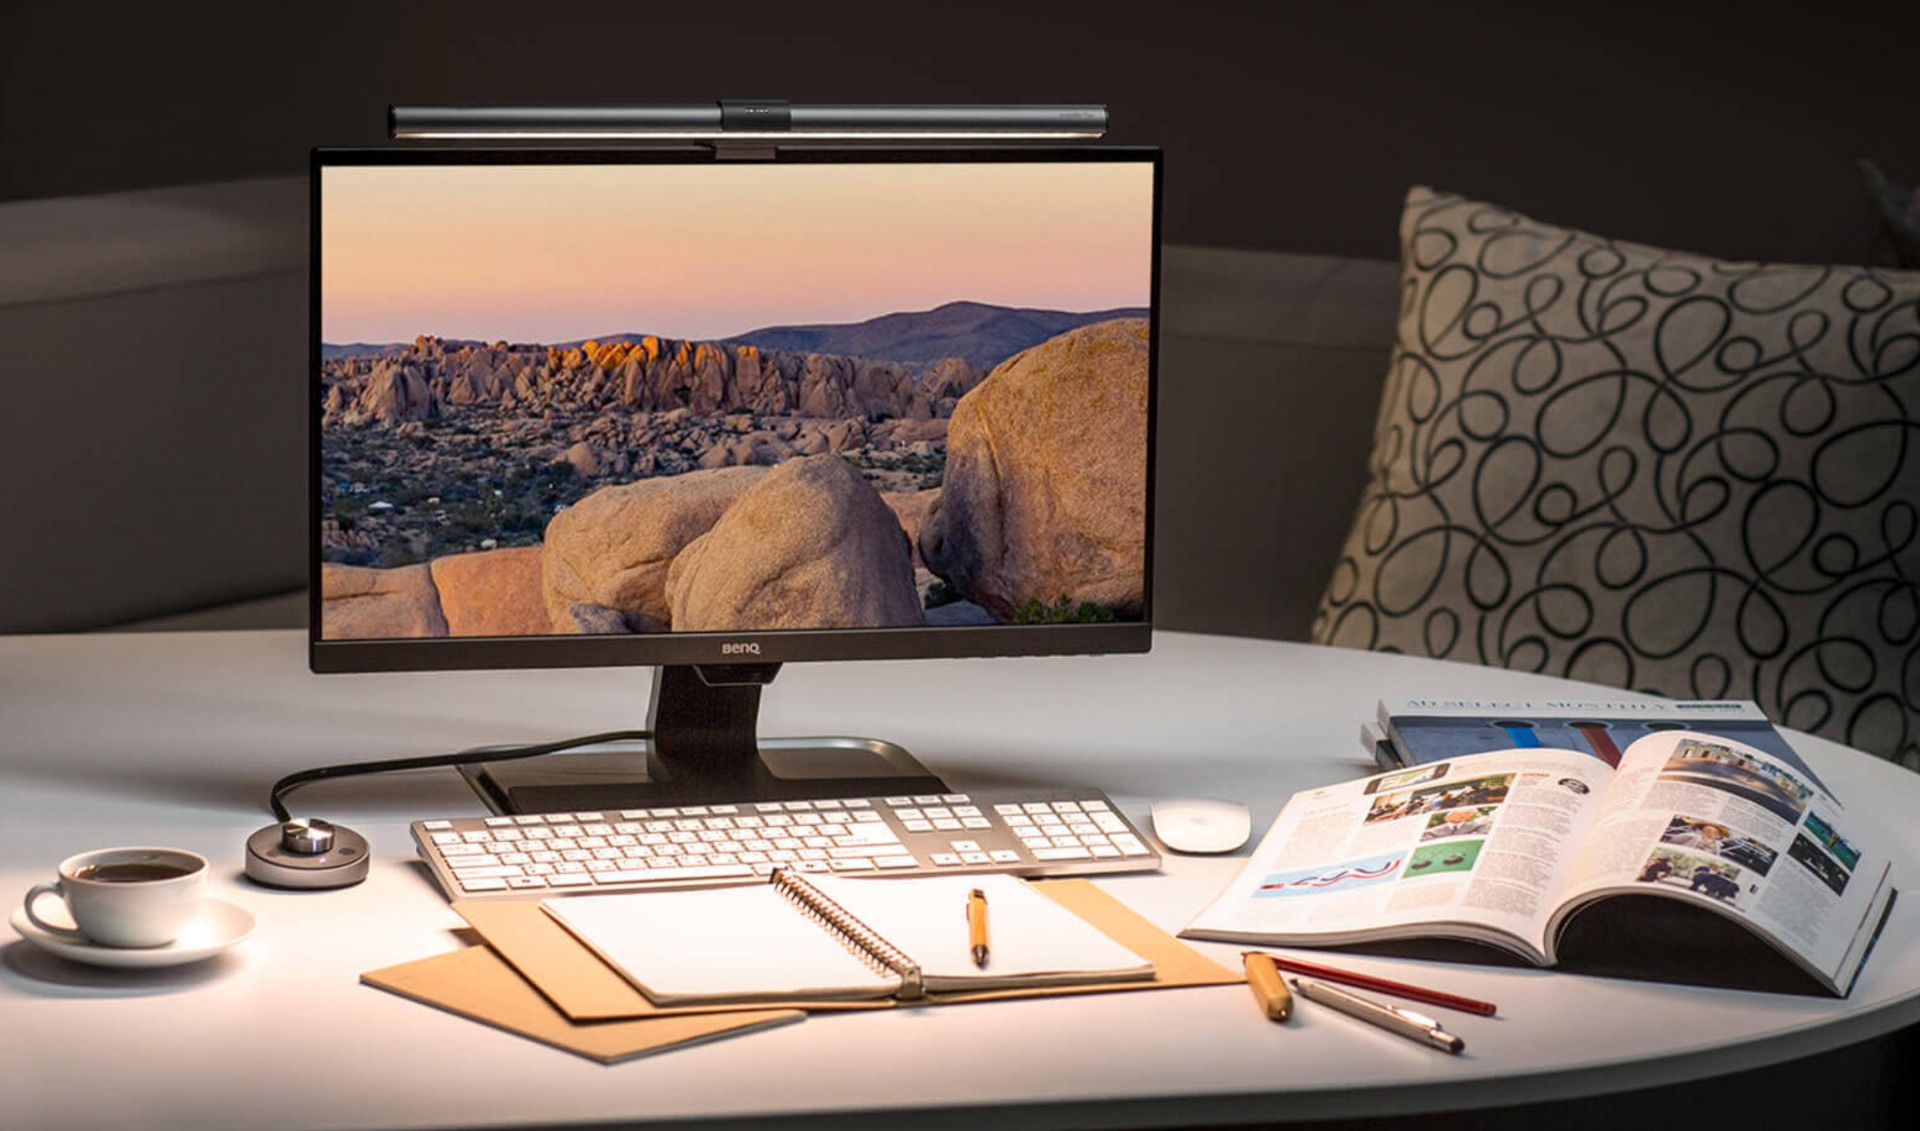 benq-screenbar-plus-monitor-lamp-with-desktop-control-dial-ambiance